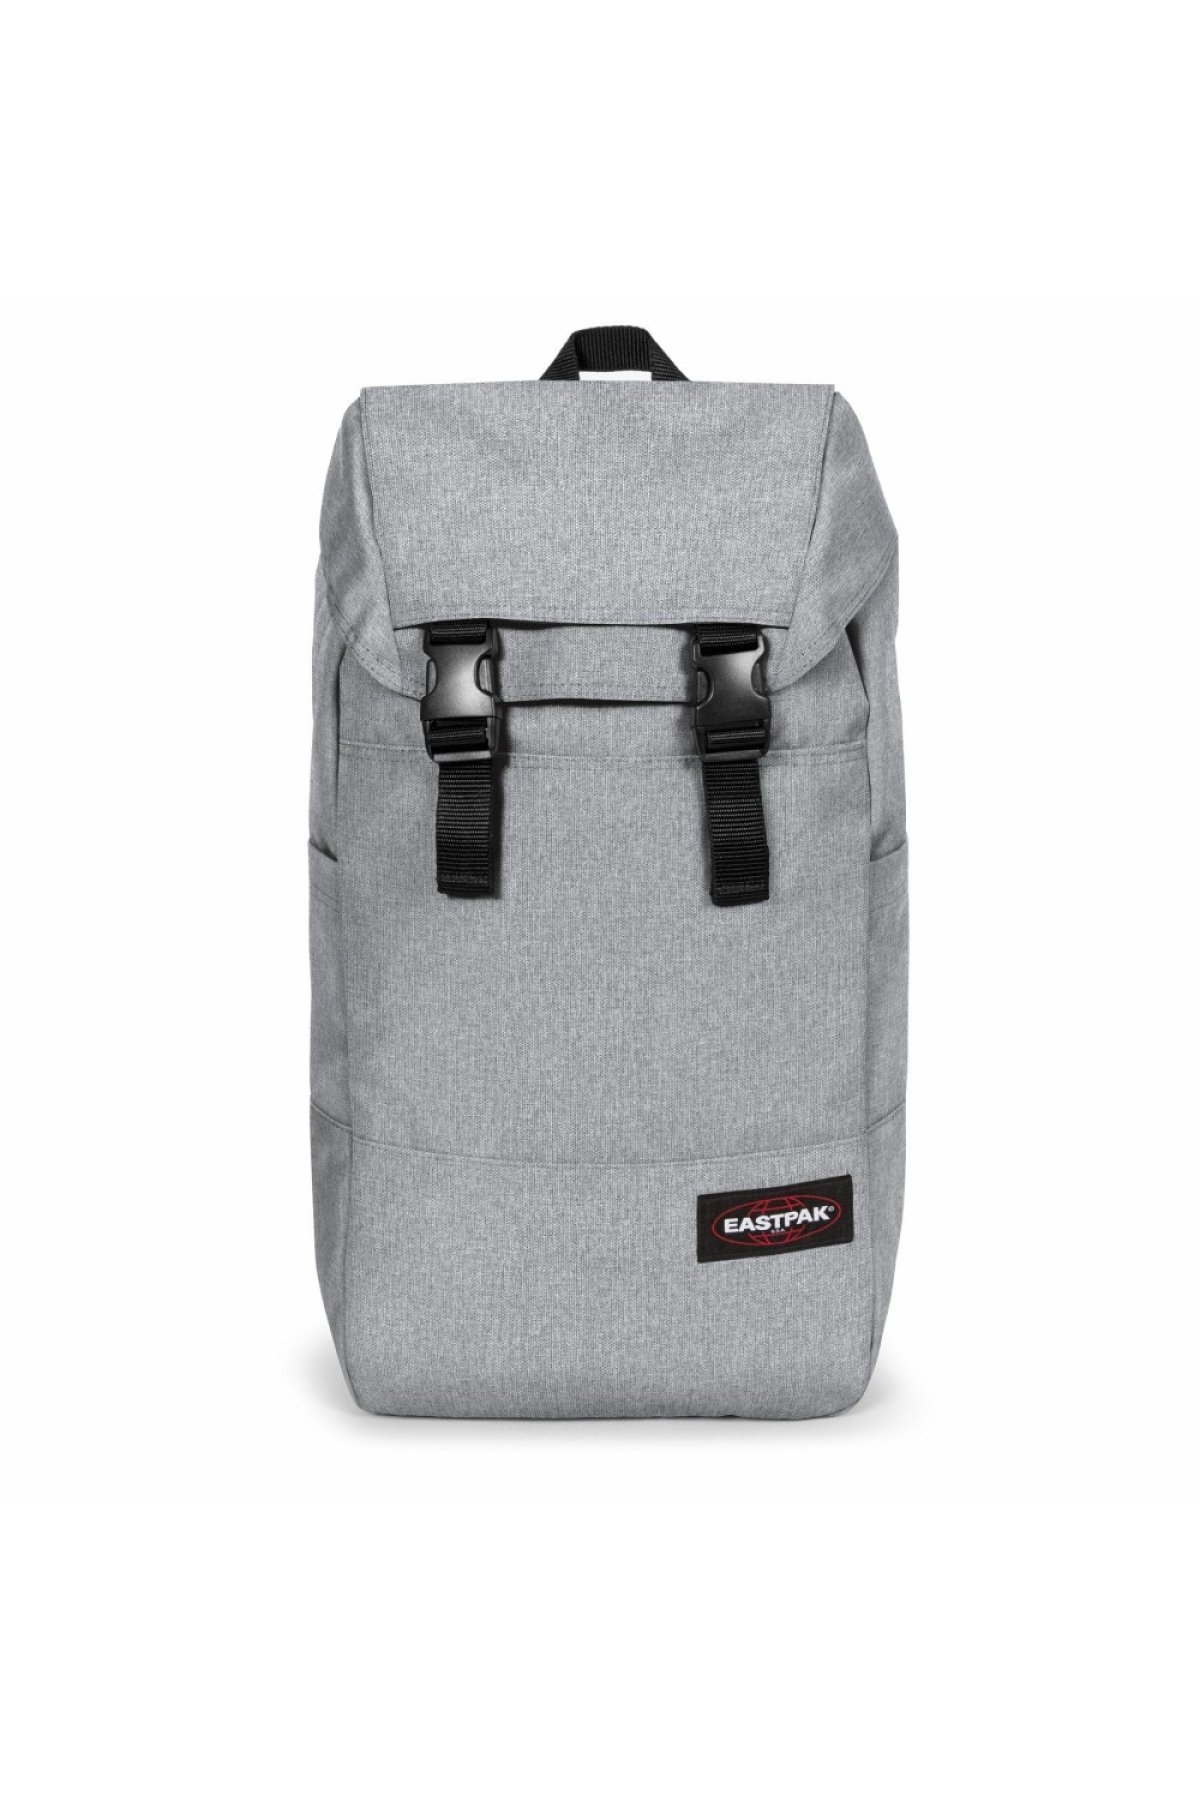 Eastpak EK18A363 Backpack šedý 20l